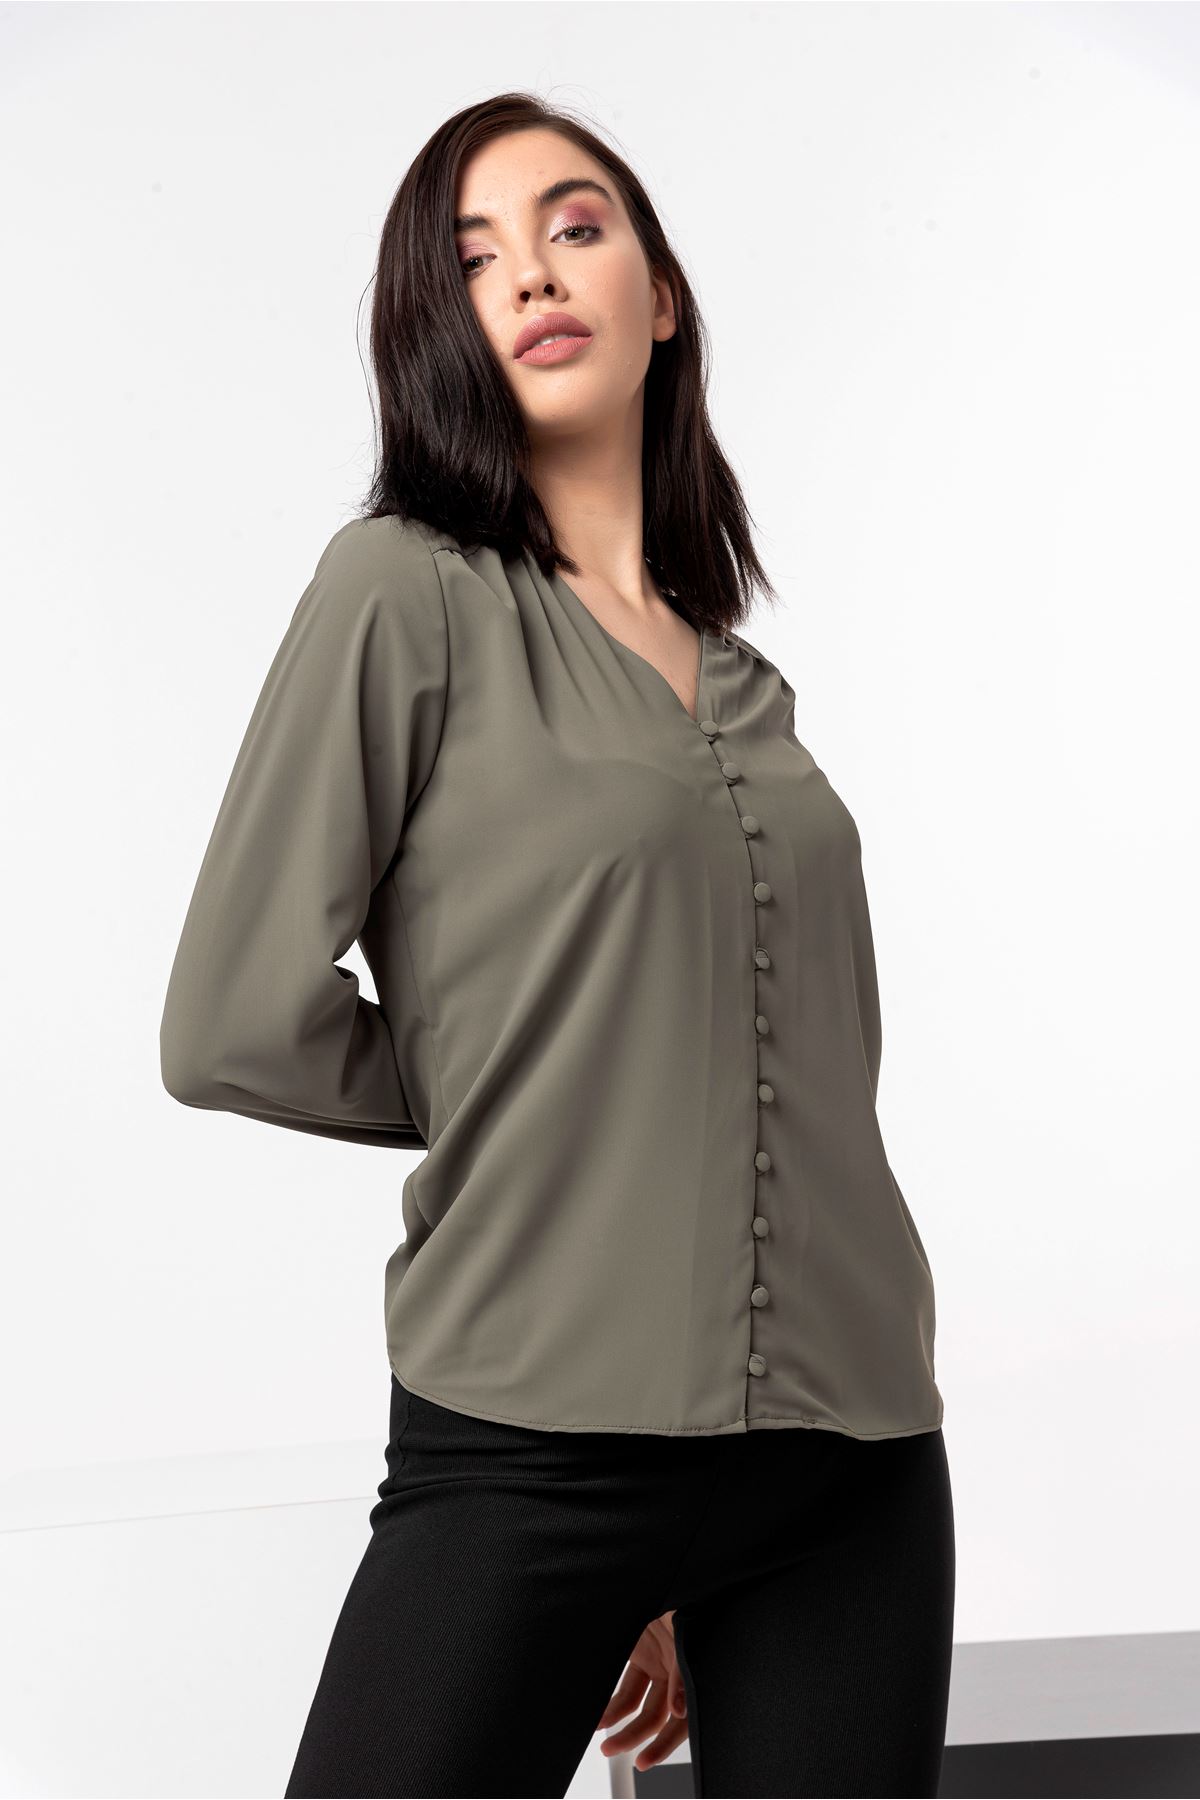 Jesica Fabric Long Sleeve V-Neck Comfy Fit Women'S Shirt - Khaki 